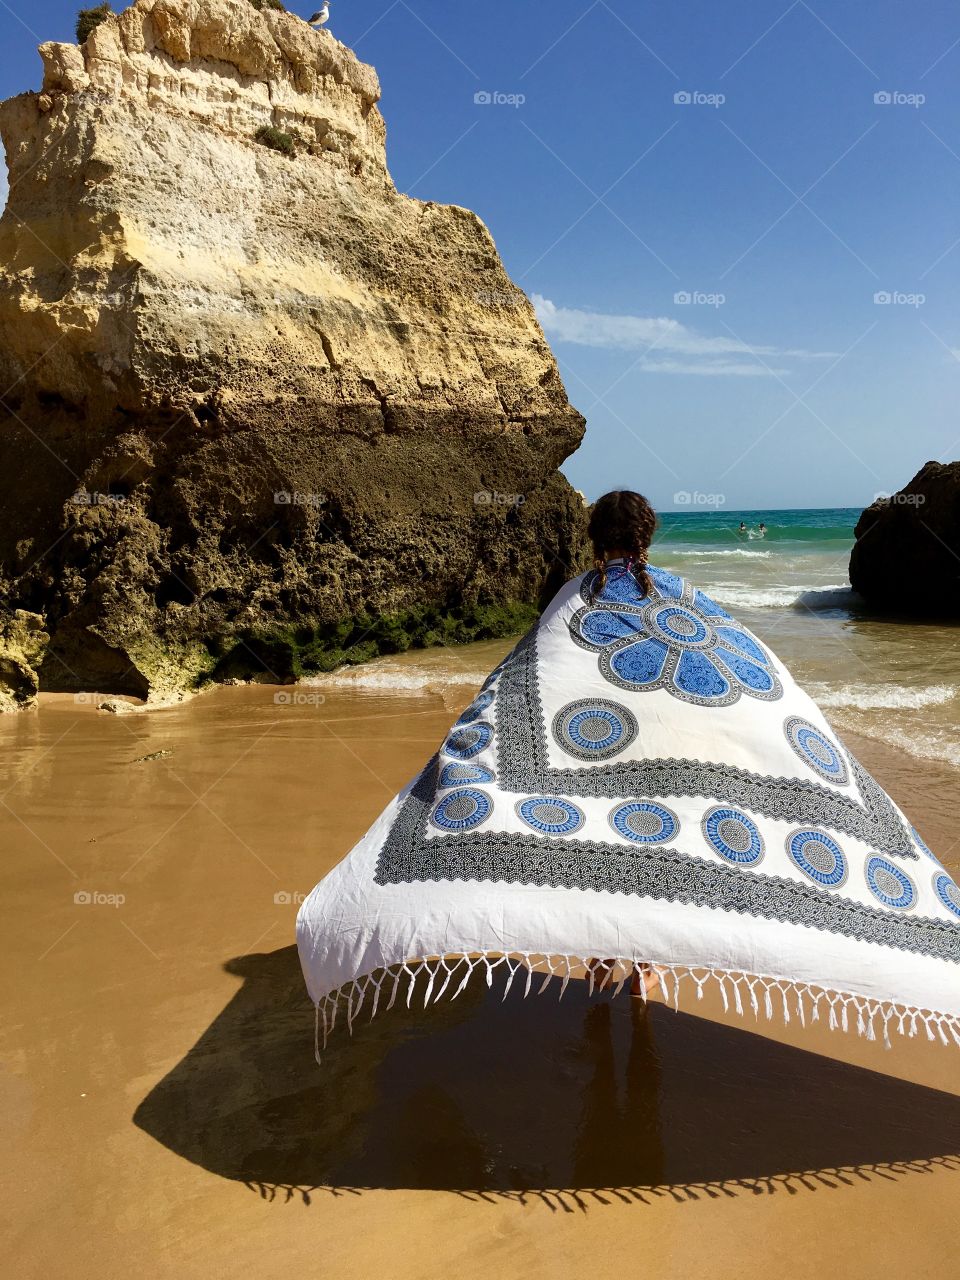 Girl carrying blanket on beach